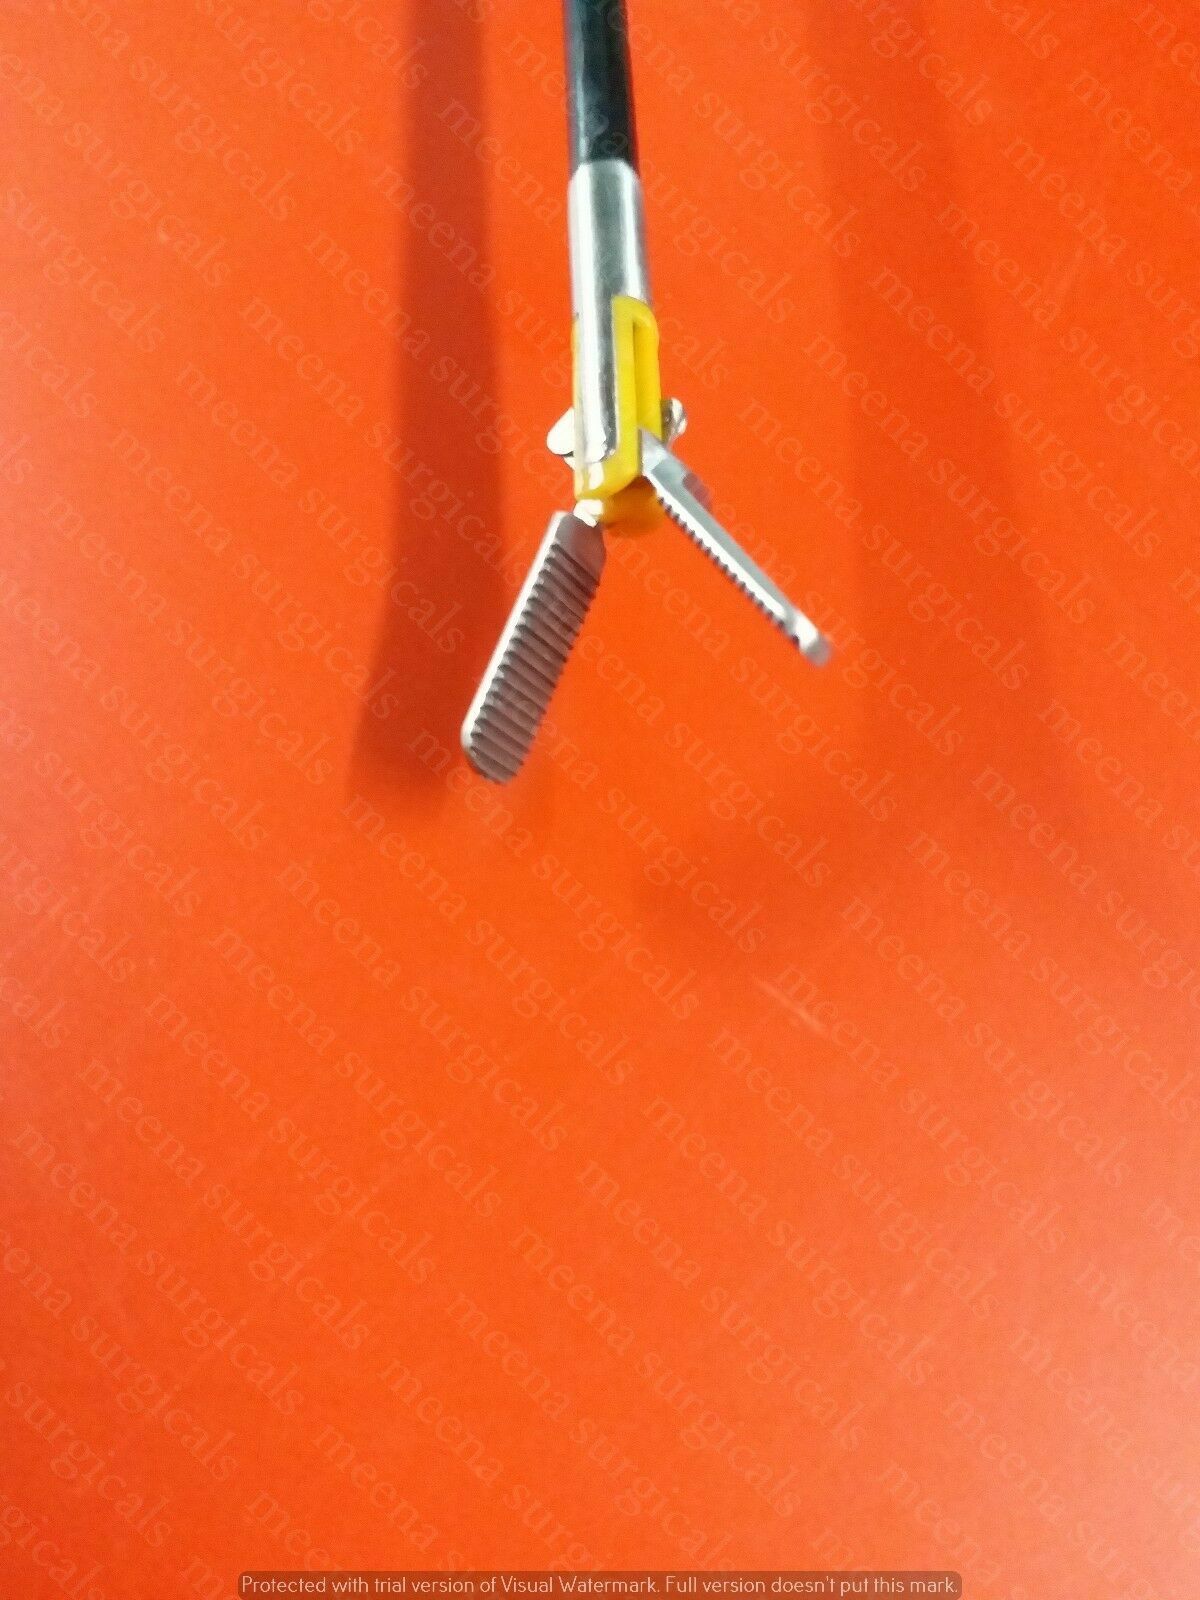 2 Laparoscopic Bipolar Roby+Cable/ Gun-Type Needle Holder 5mm x 330mm Instrument Nowy, GORĄCY